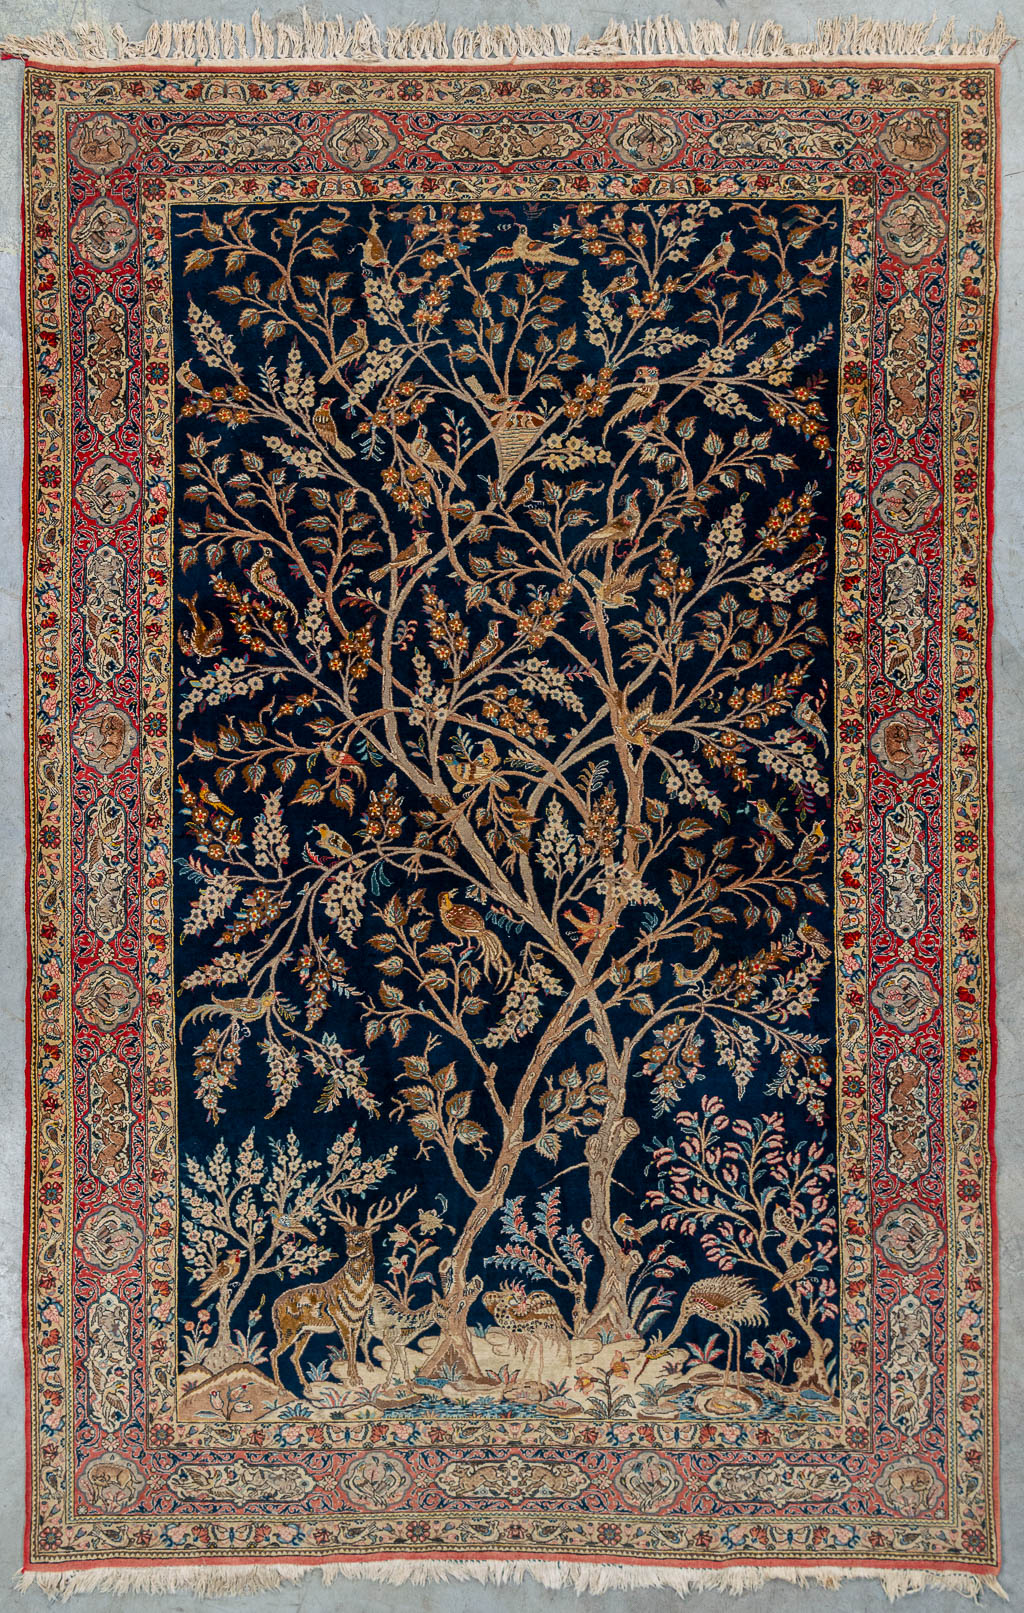 An antique hand-made carpet 'Ghom', made in Iran. 324cm x 207cm. (207 x 324 cm)